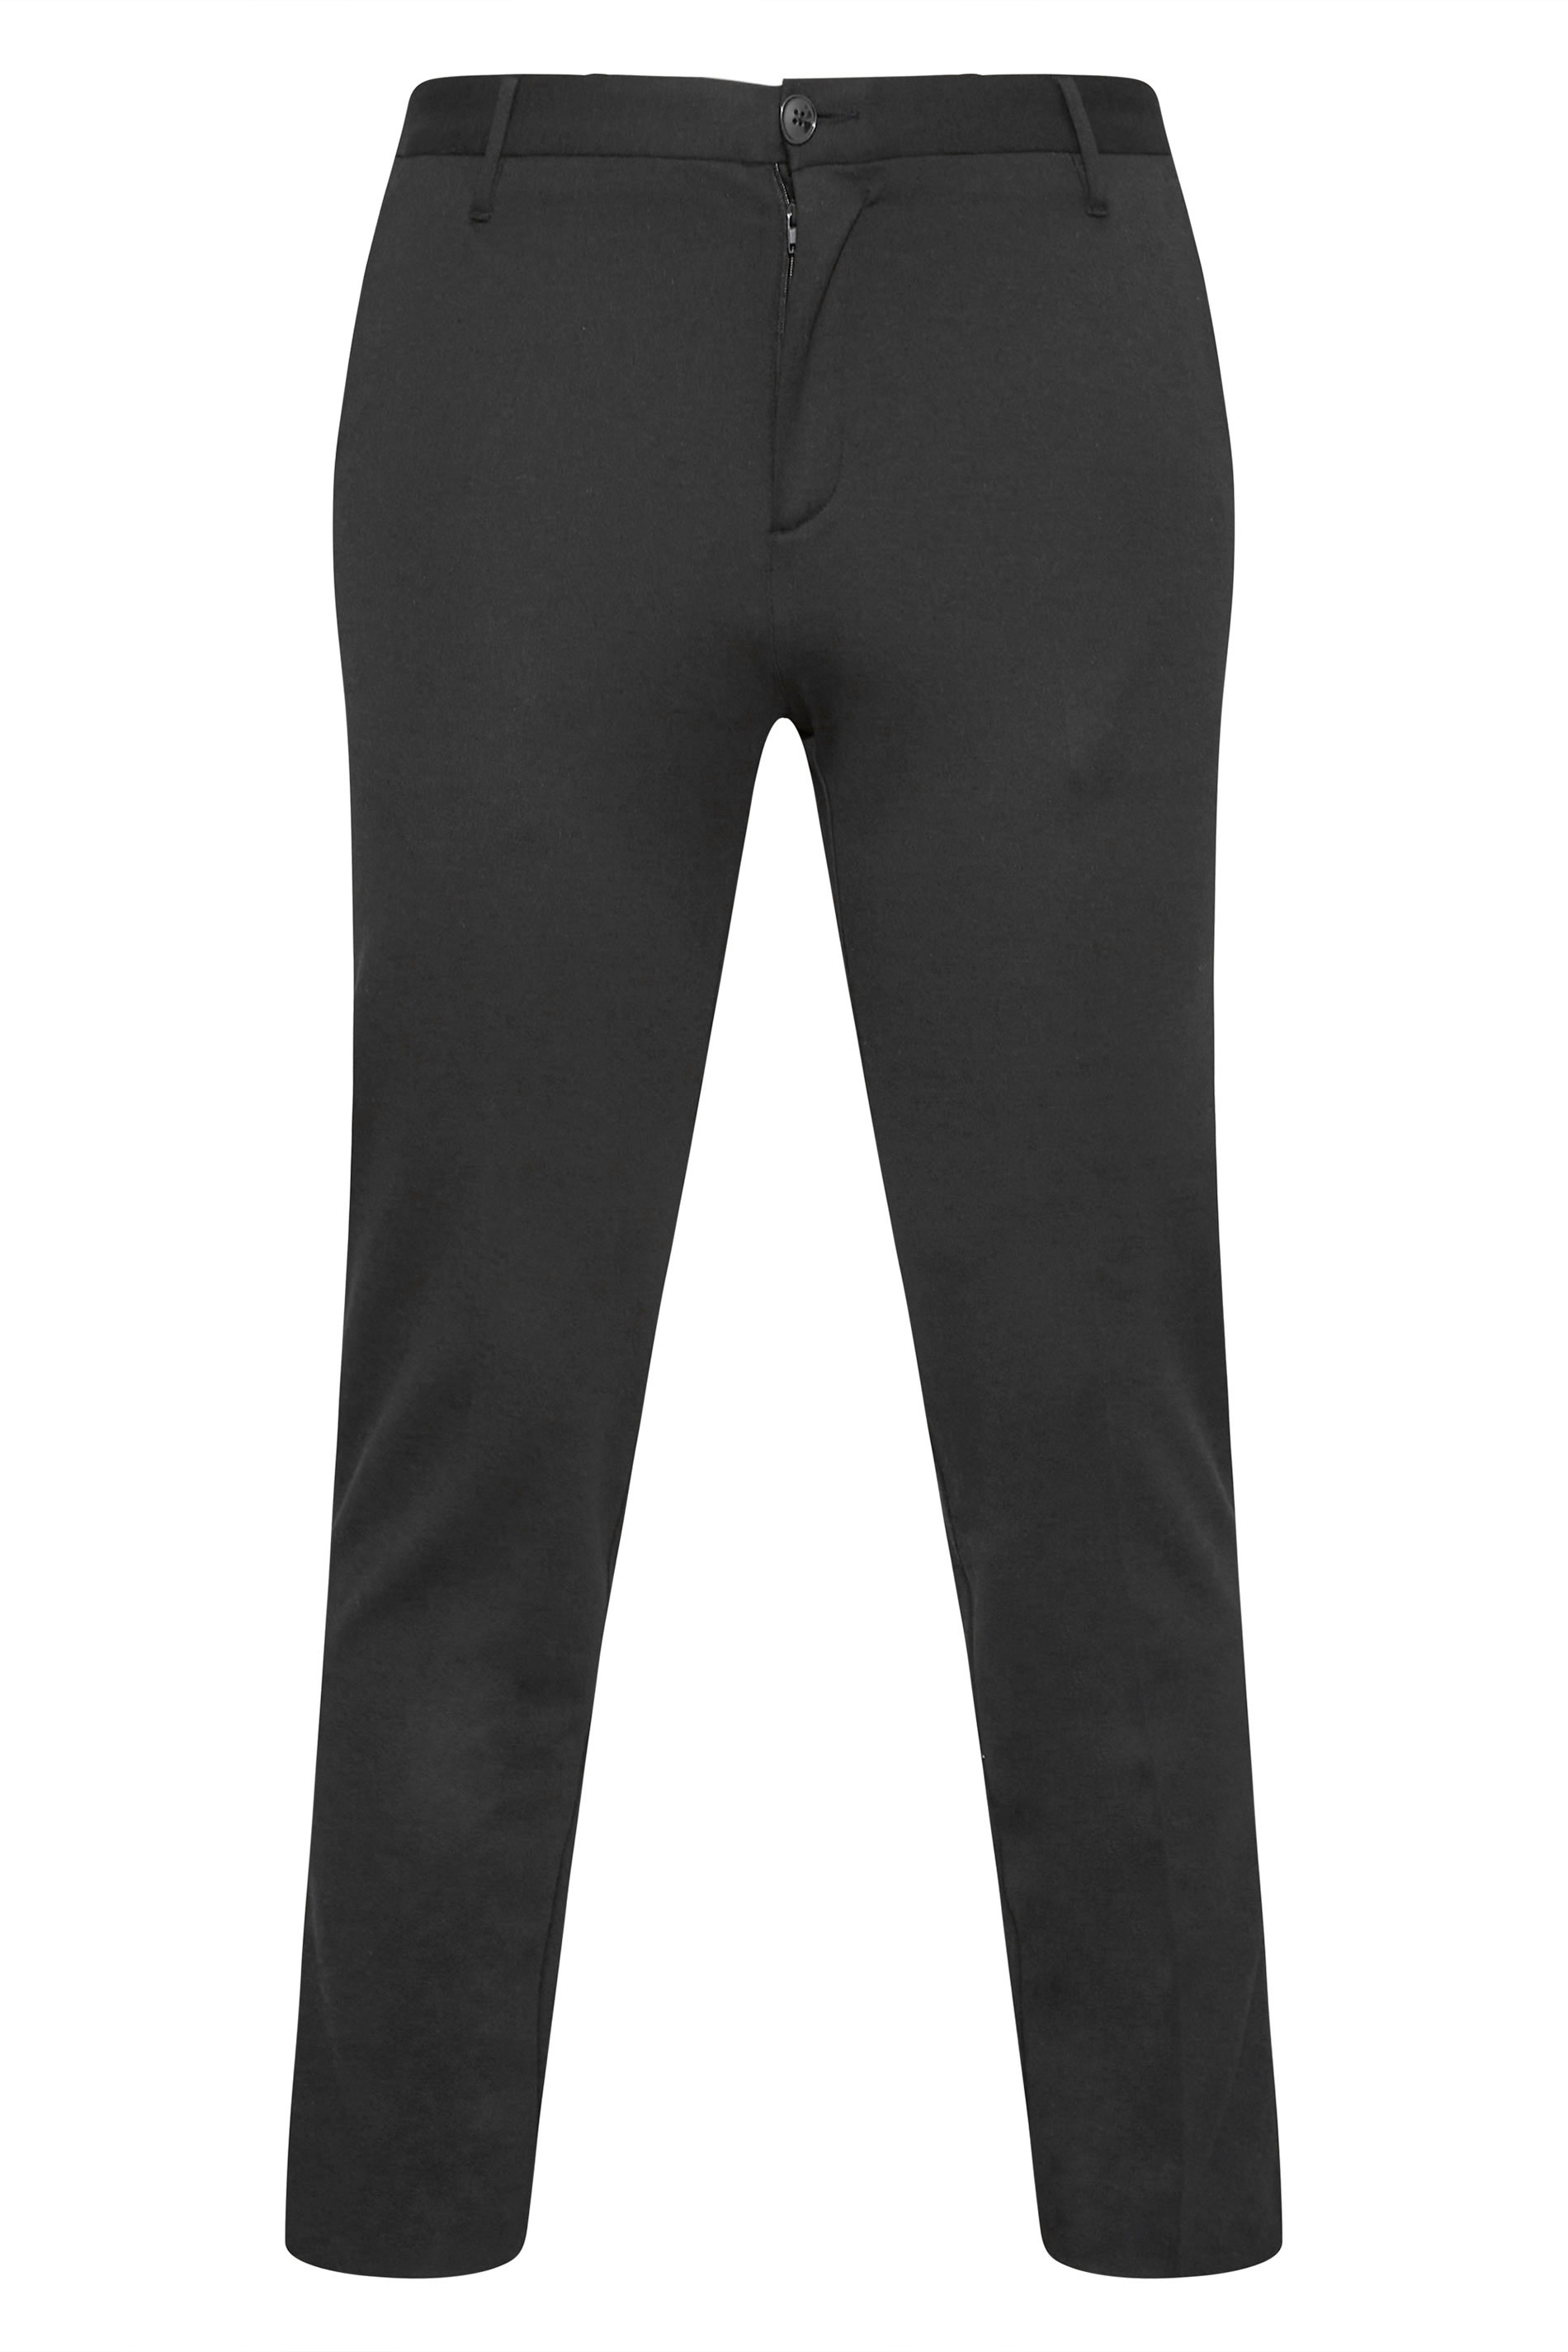 BadRhino Big & Tall Black Stretch Trousers_F.jpg